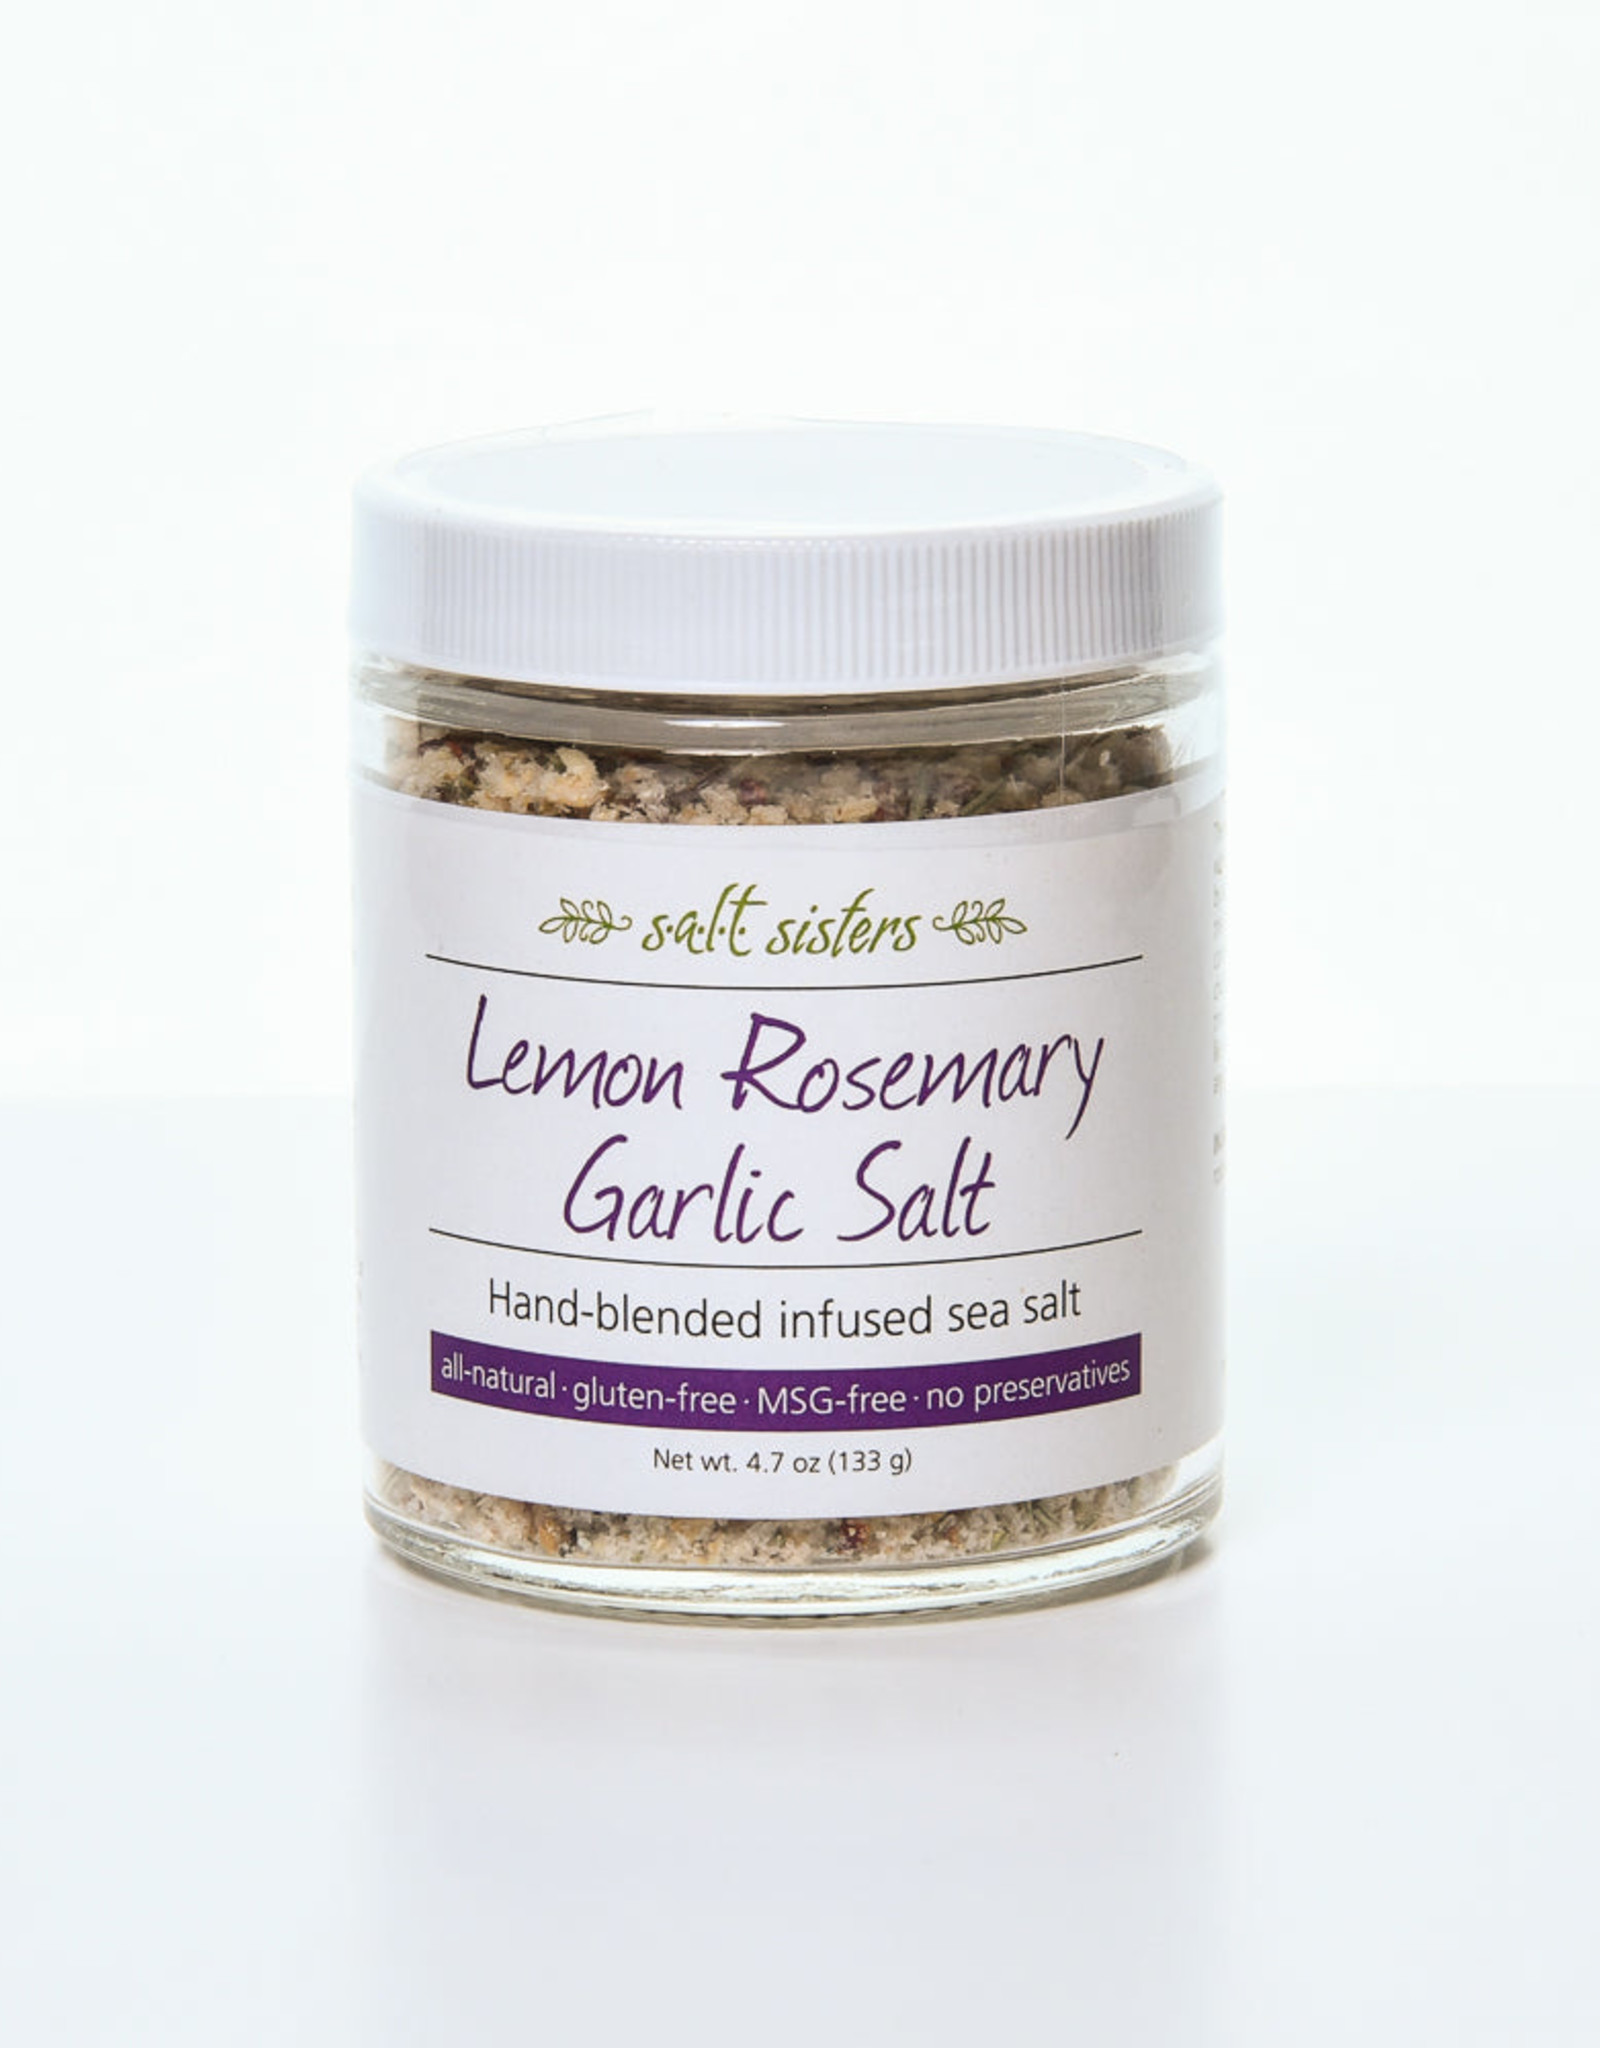 s.a.l.t. sisters Lemon Rosemary Garlic Salt 4.7oz